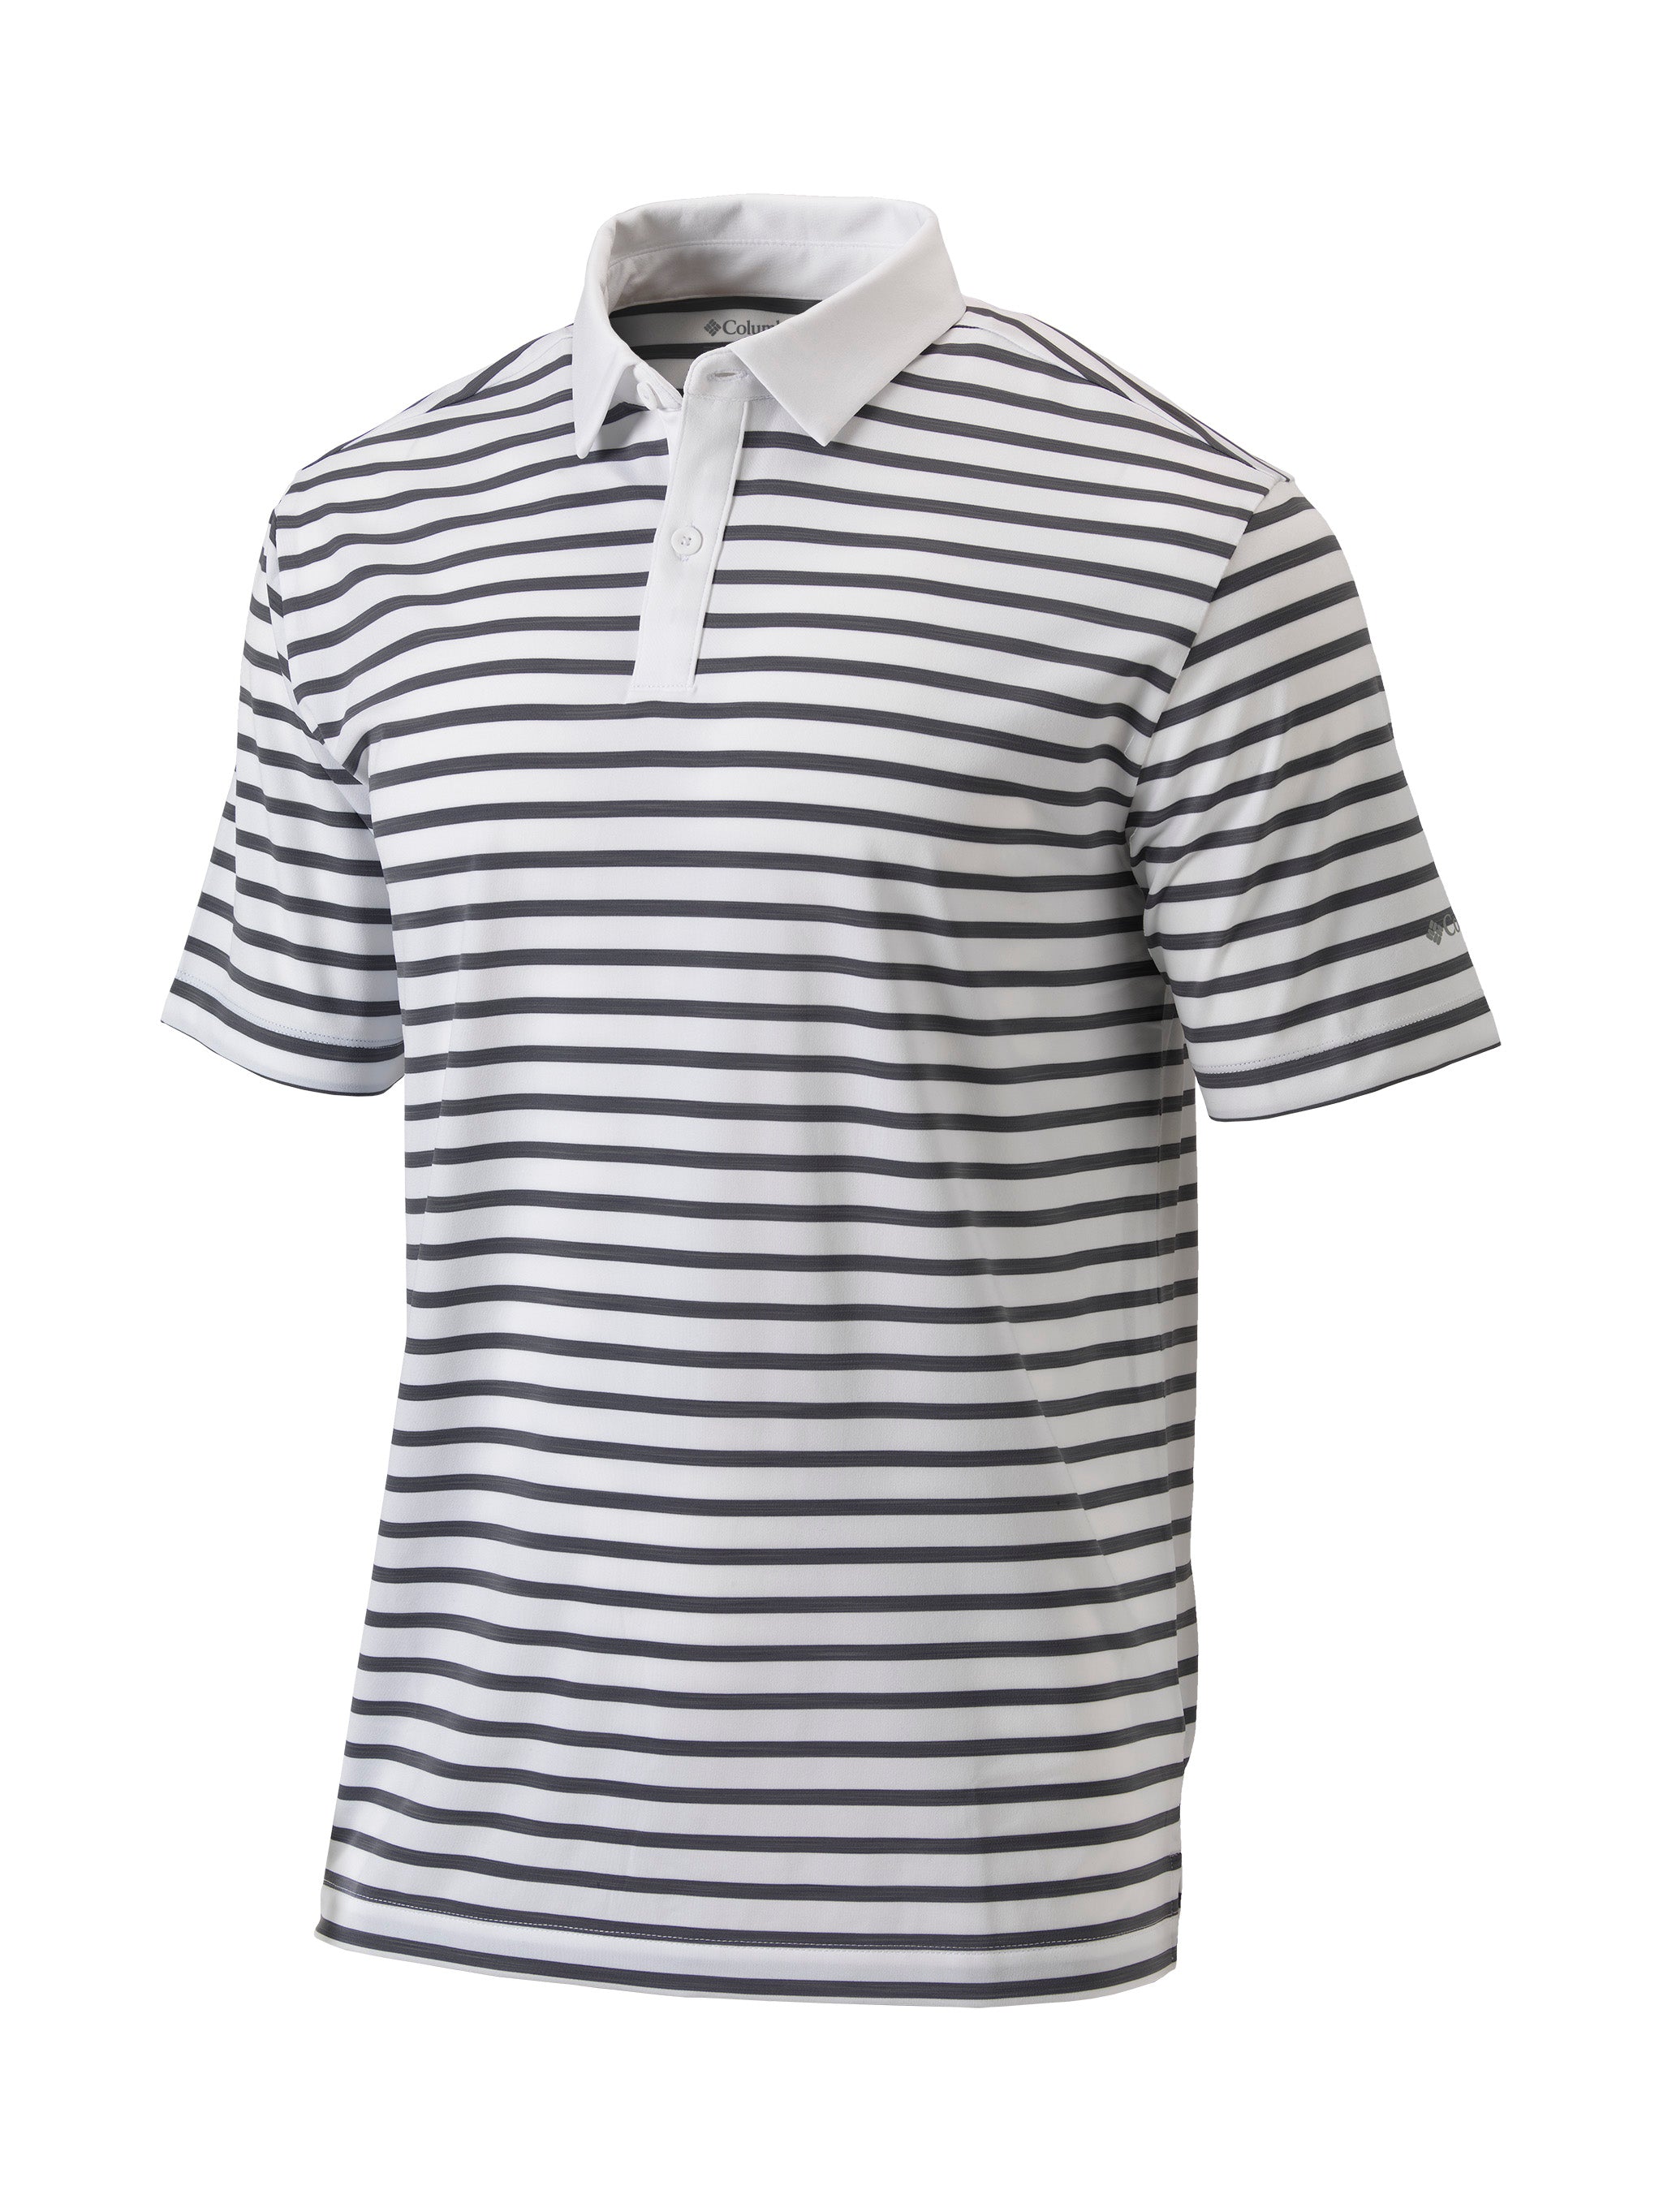 Columbia Mens Personalized Omni-Wick Gamer Polo Golf Shirt - Golf Tees Etc